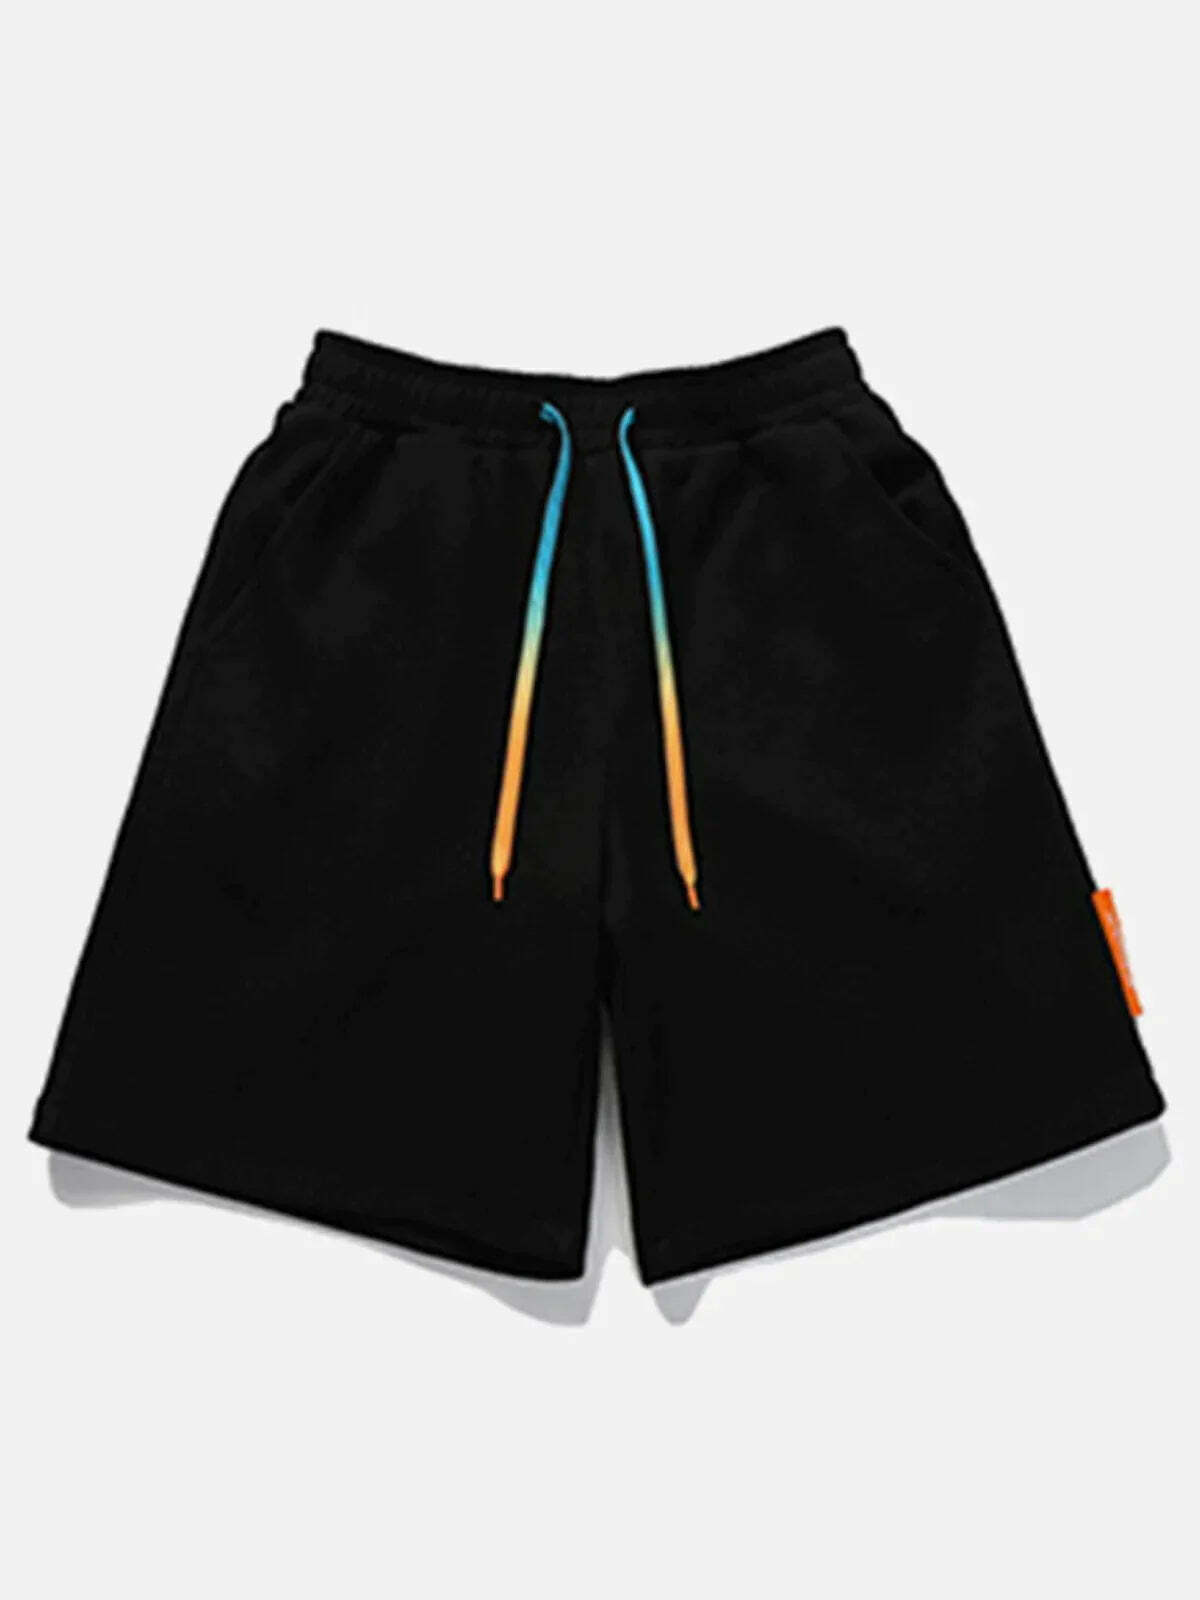 colored drawstring shorts youthful & custom design 2121